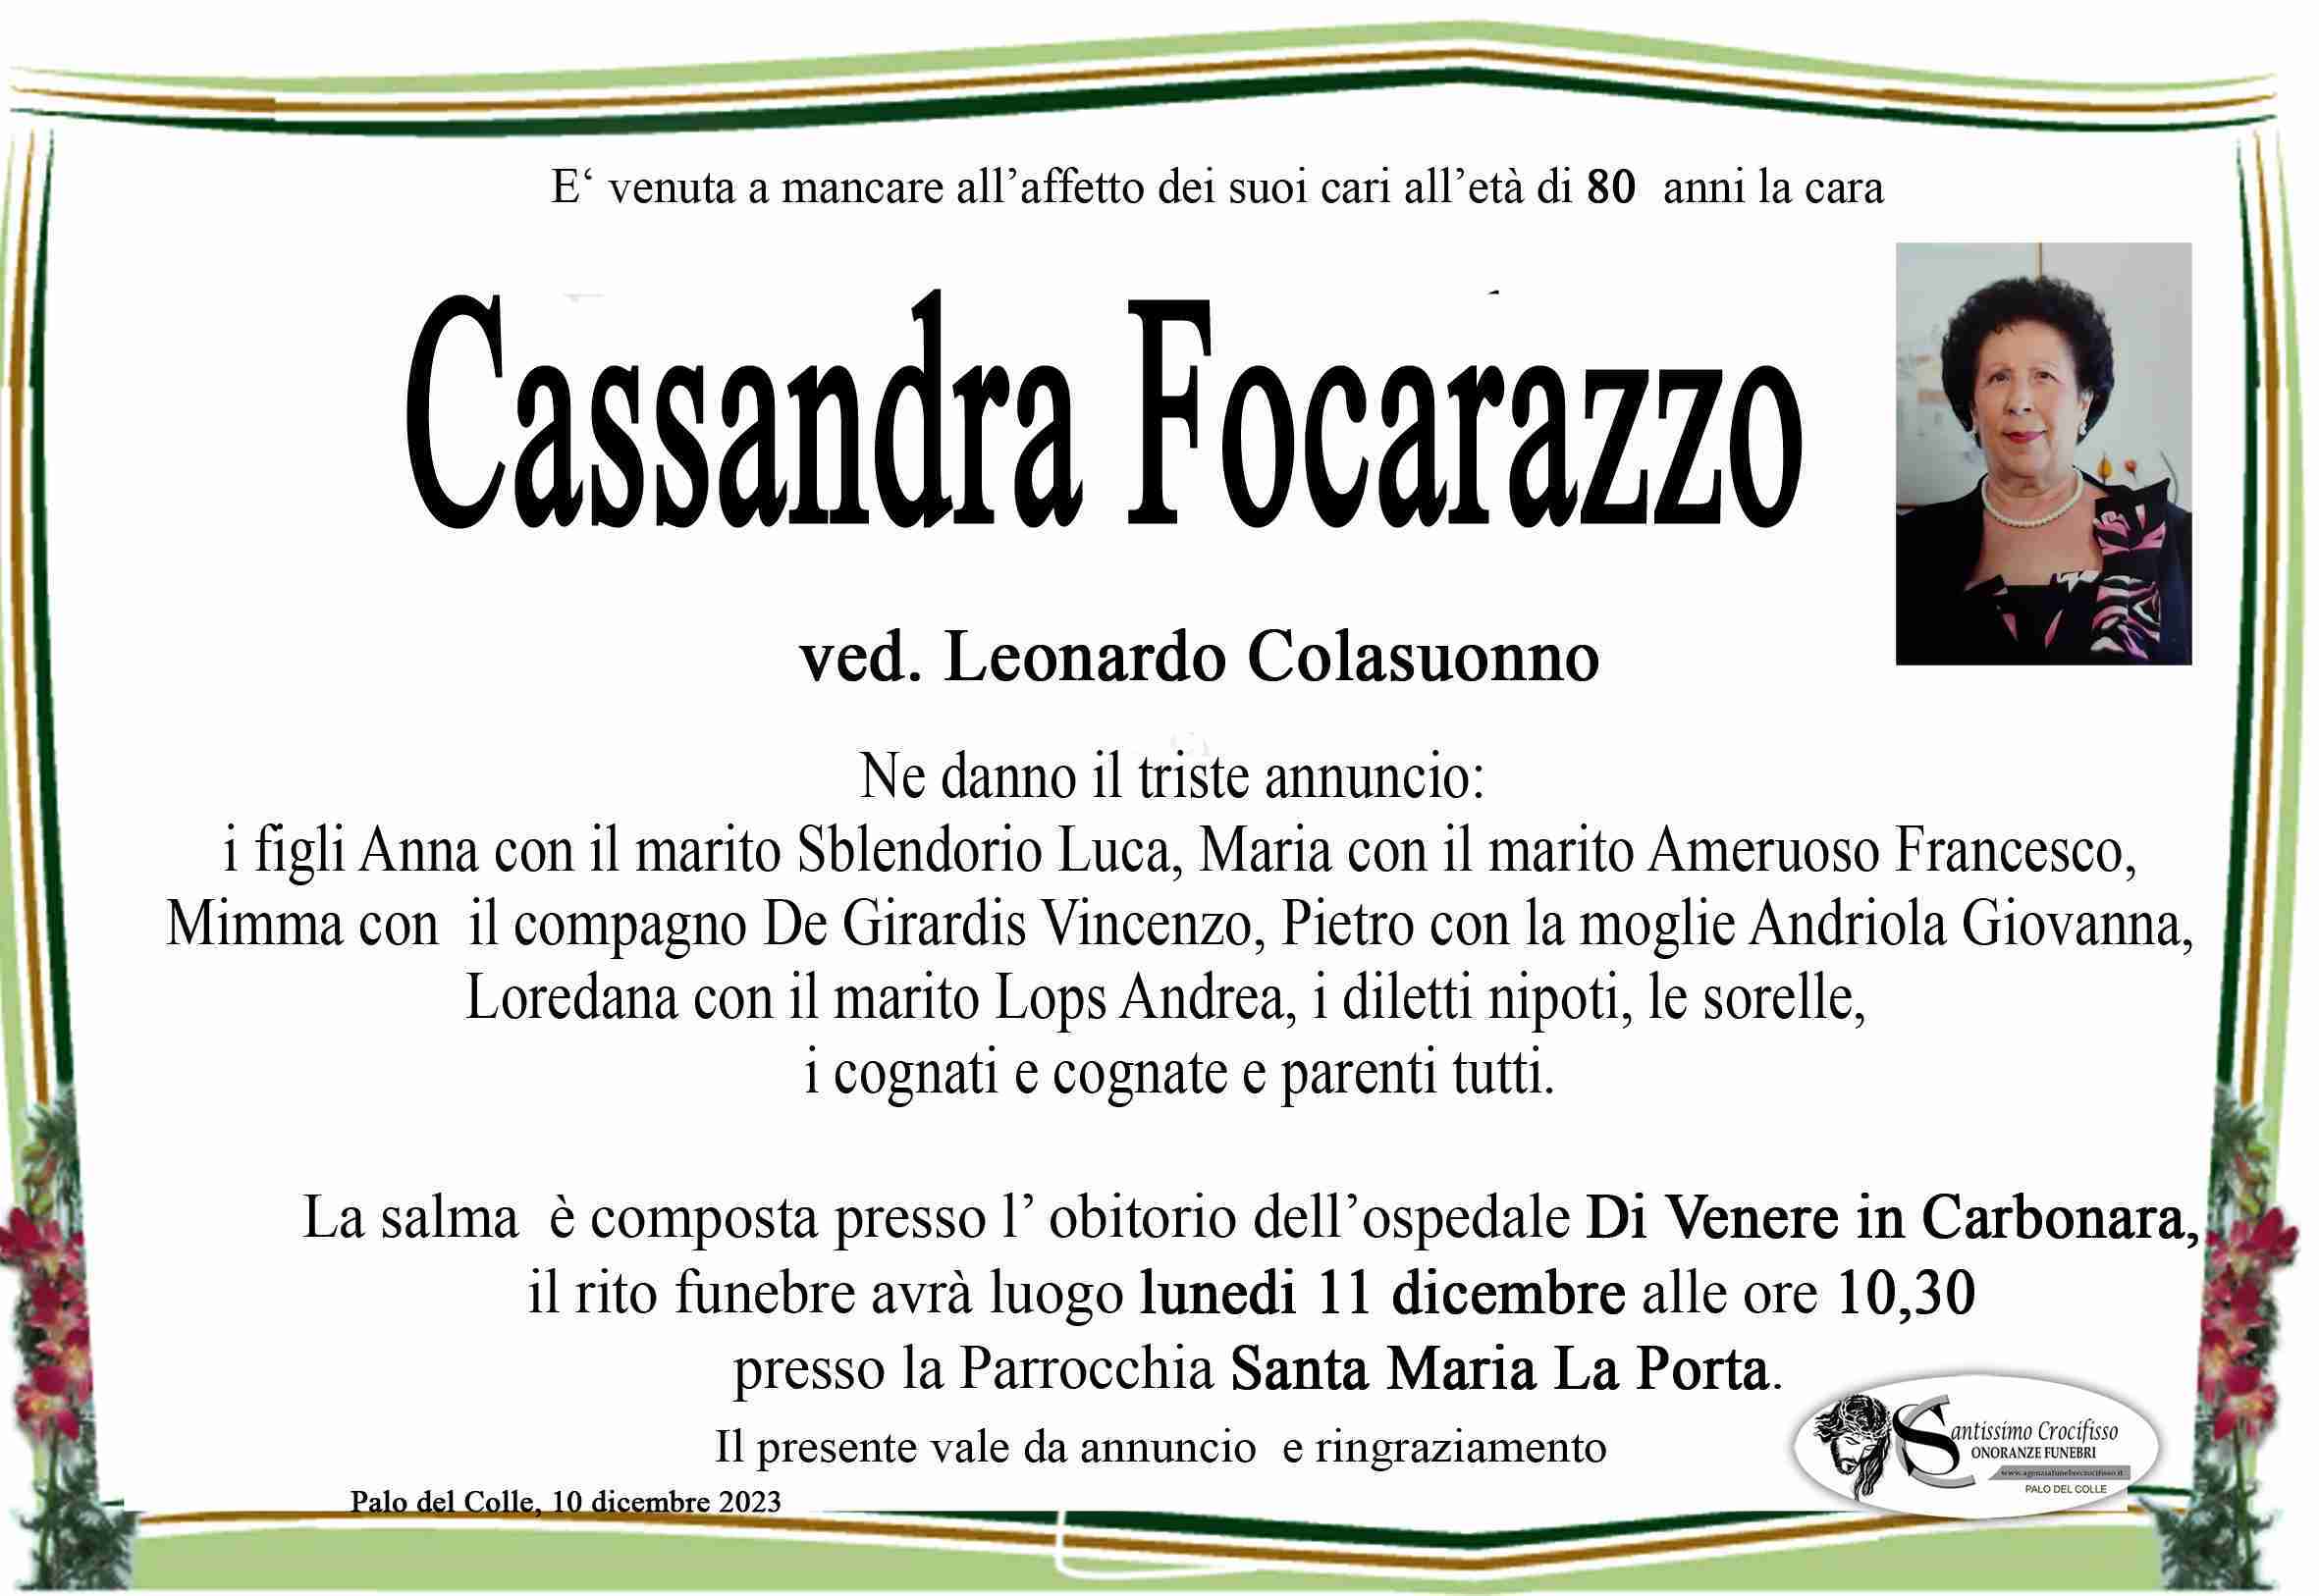 Cassandra Focarazzo